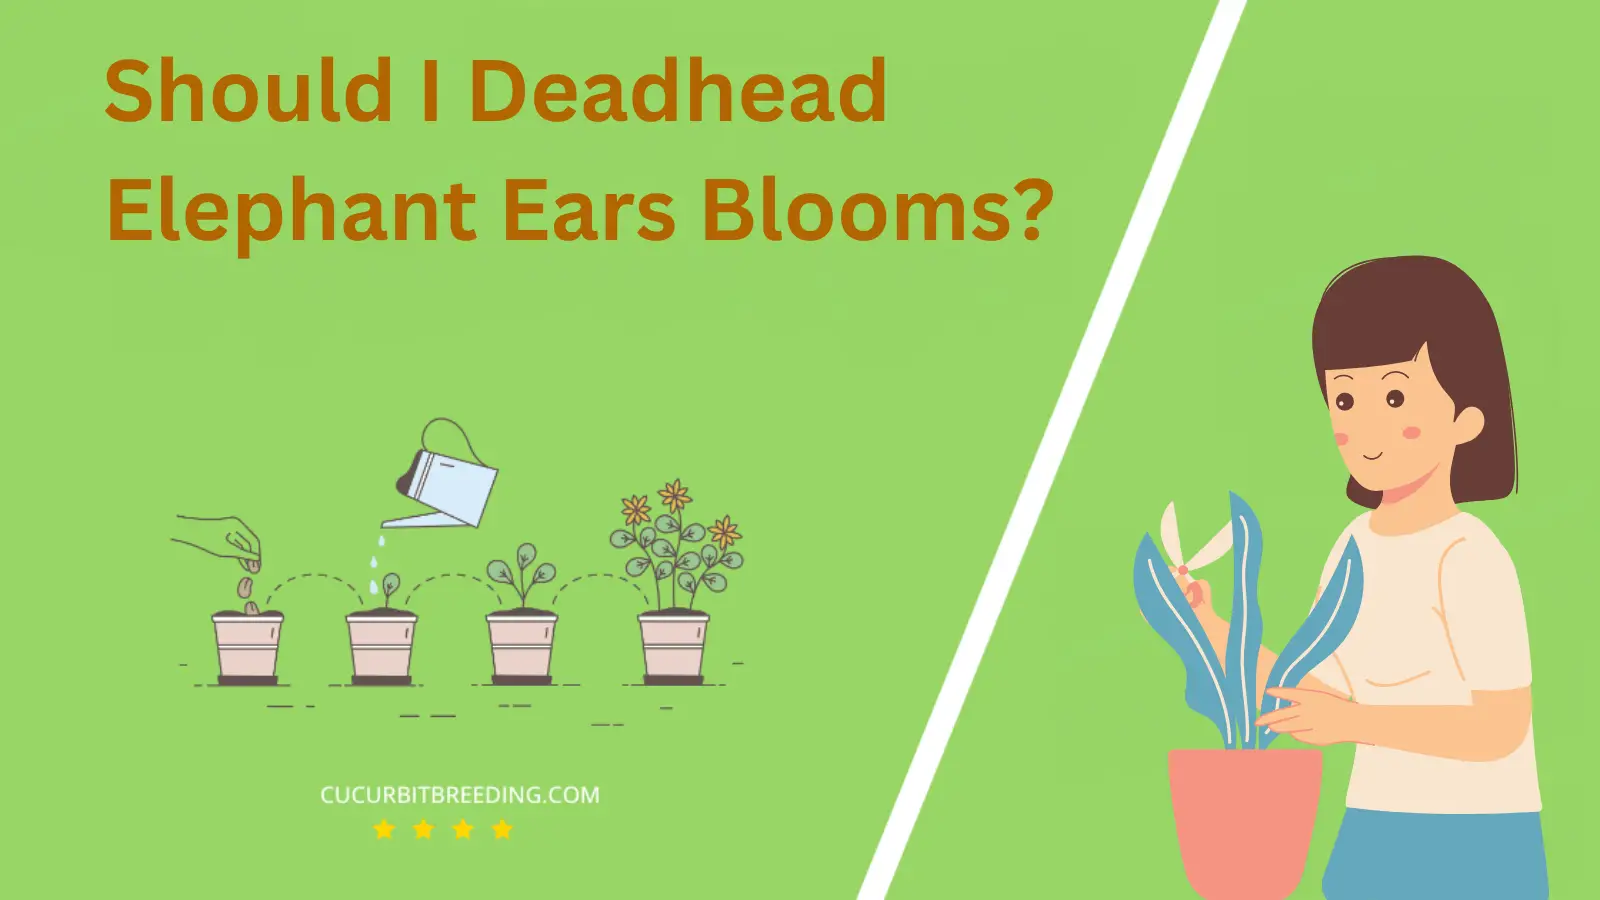 Should I Deadhead Elephant Ears Blooms?